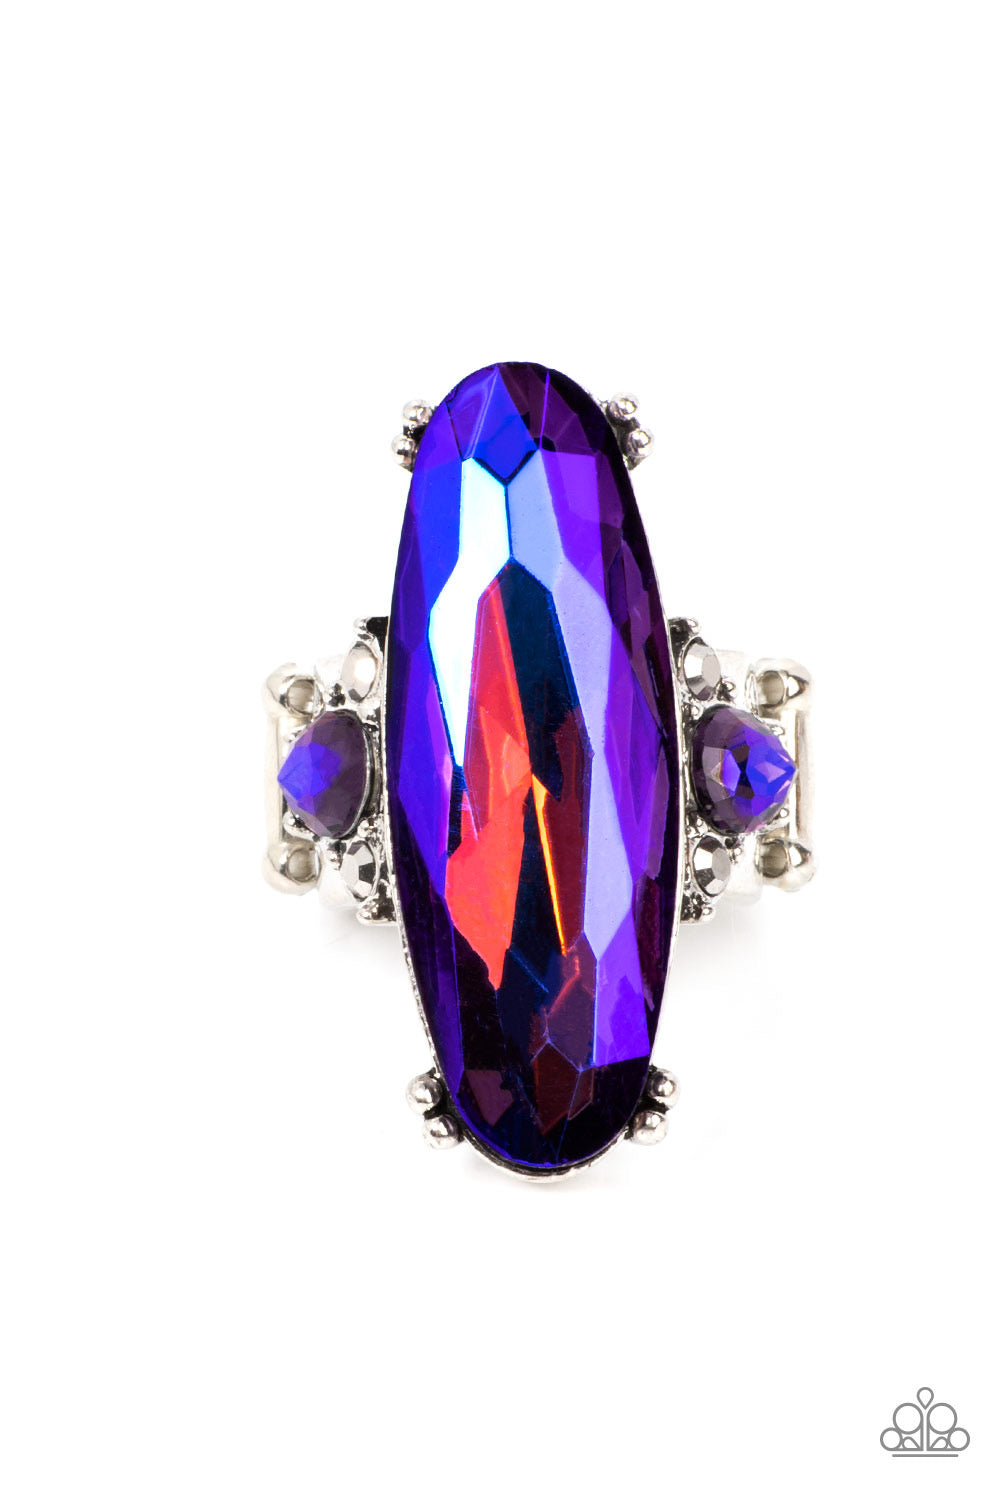 Interdimensional Dimension - Blue Ring - Paparazzi Jewelry paparazzi jewelry images